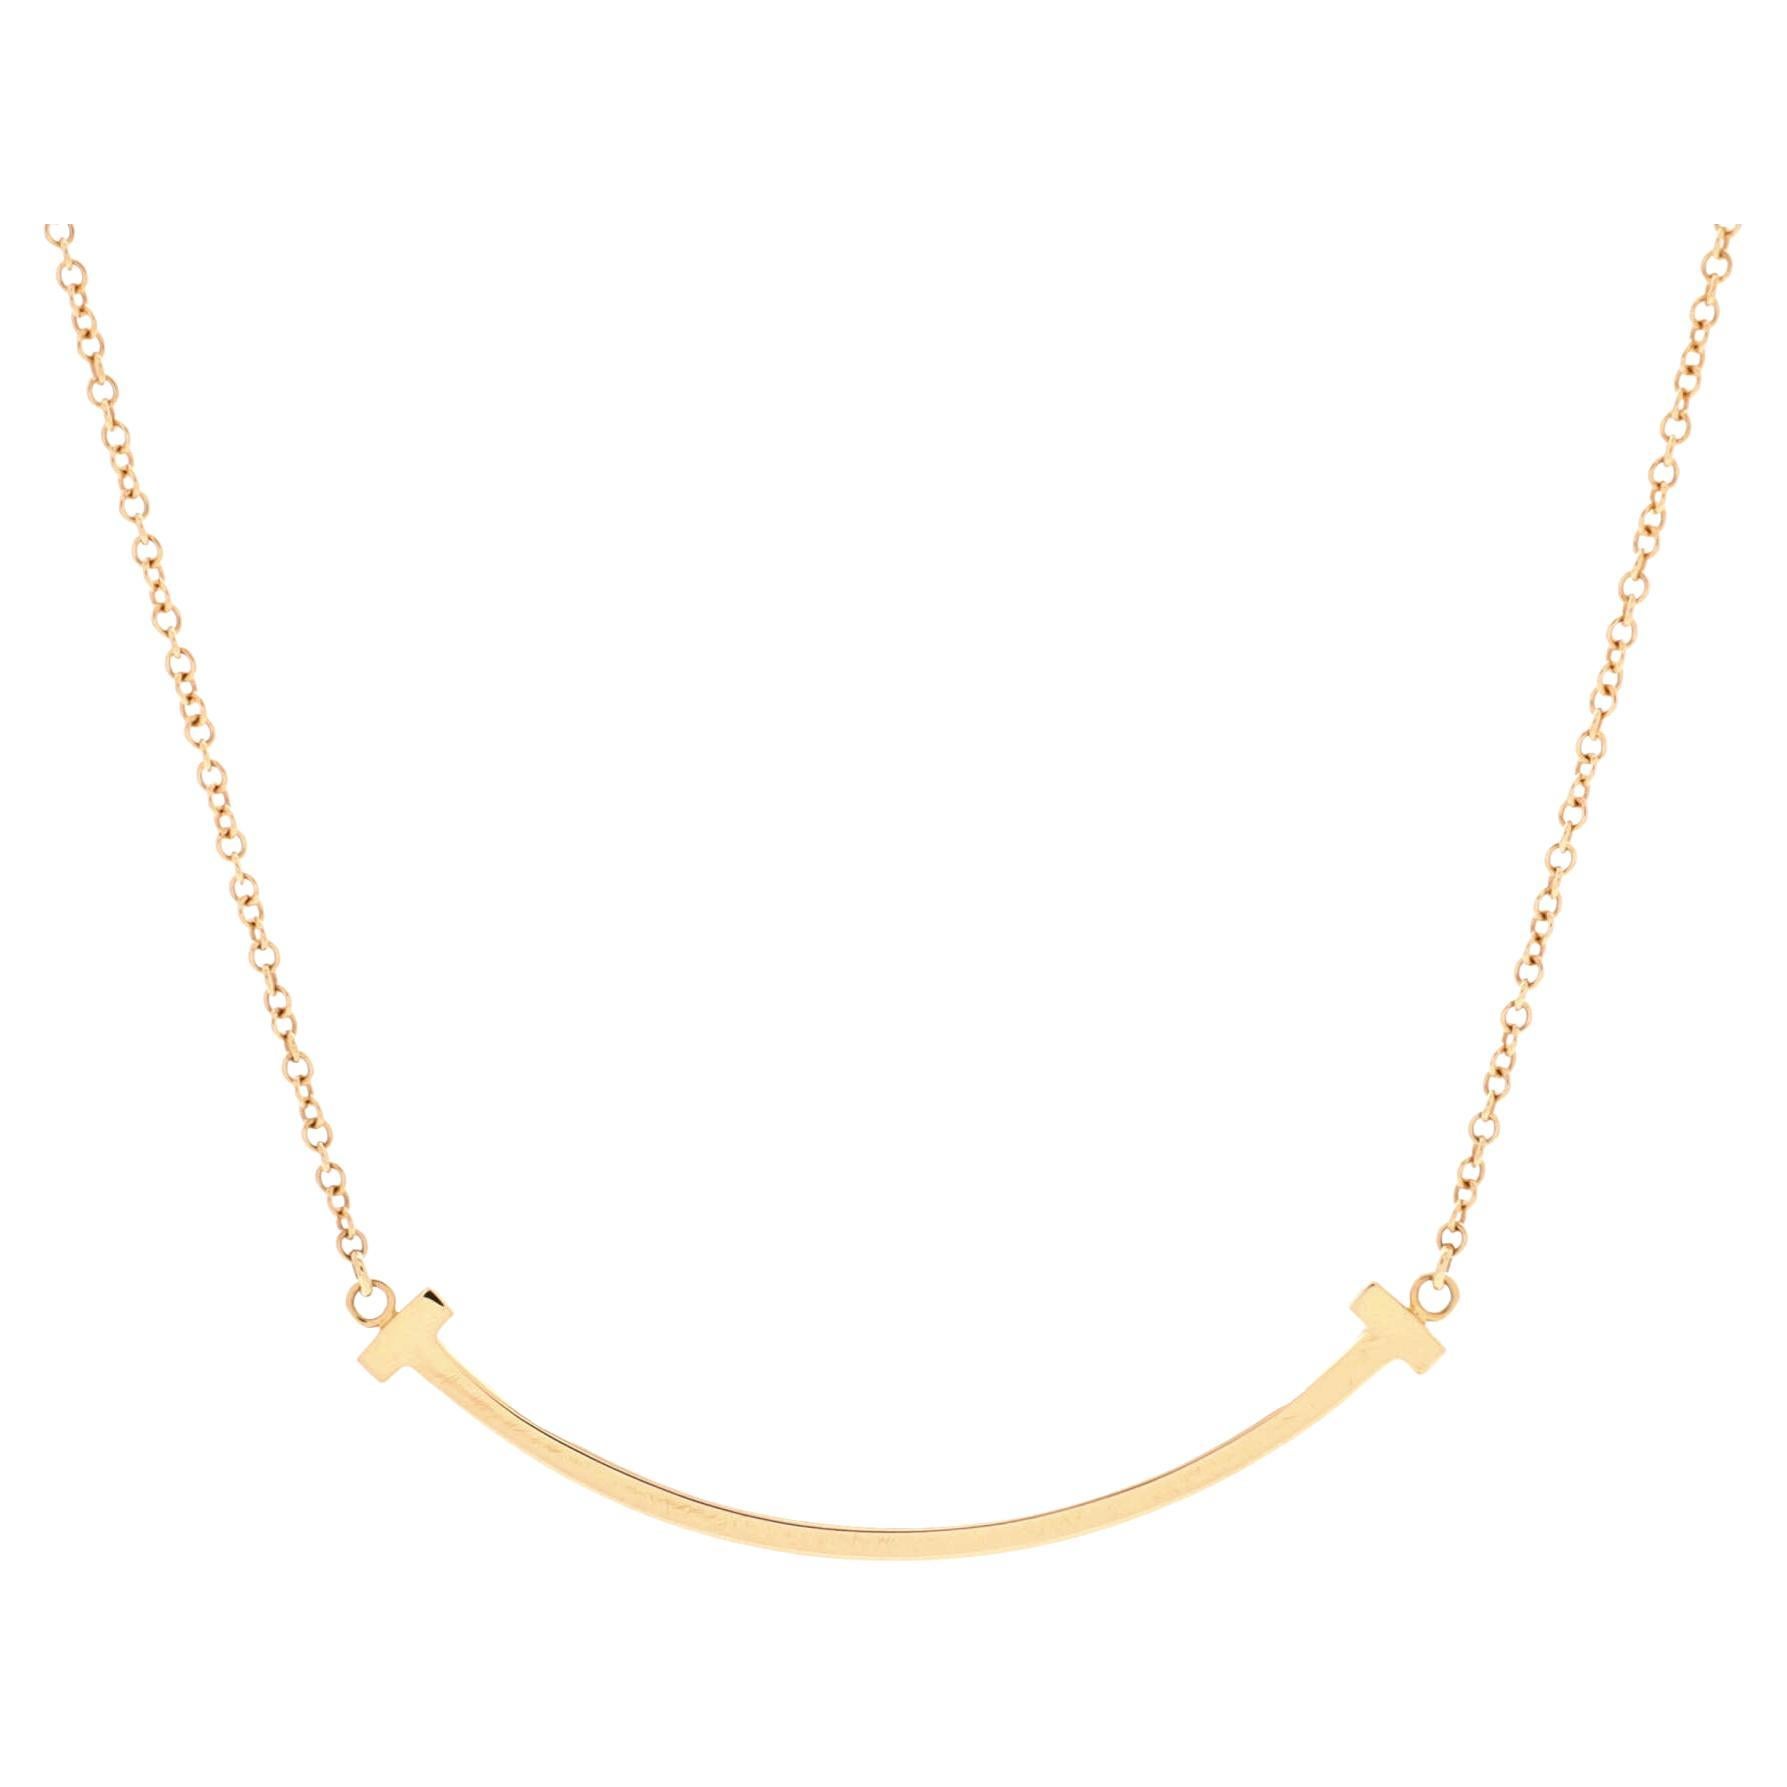 Tiffany T medium smile pendant in 18k gold with diamonds.